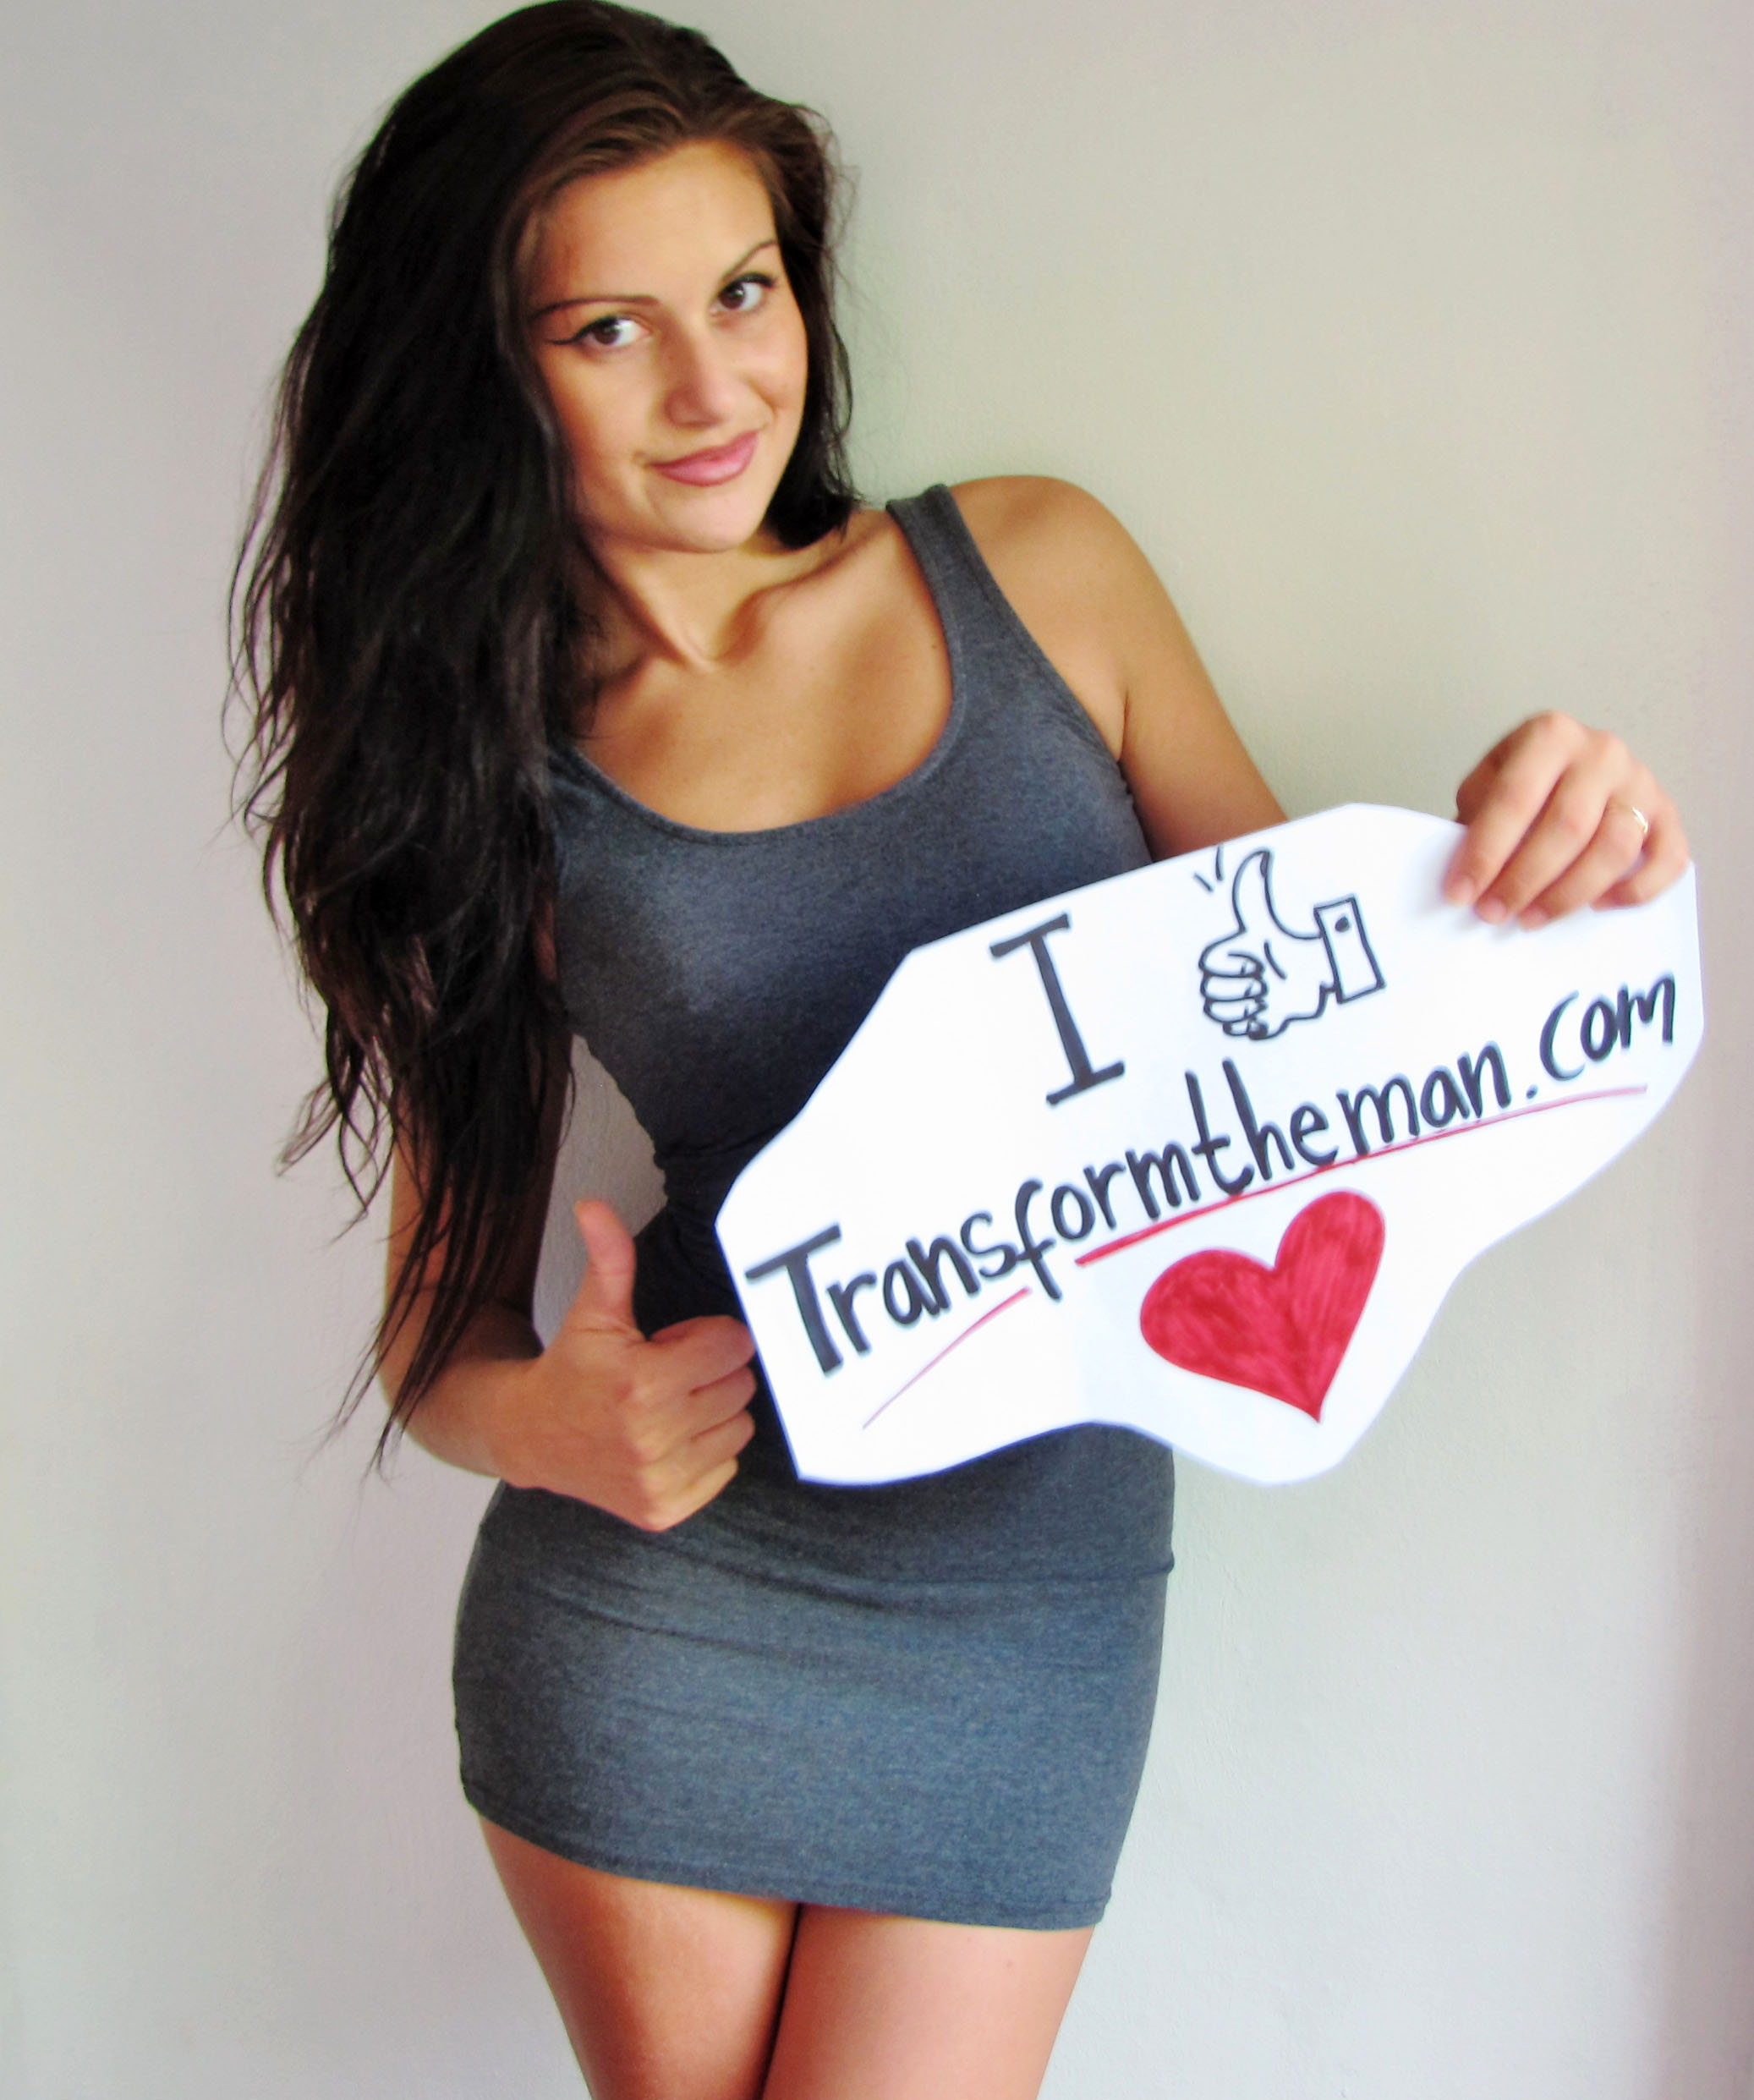 Love Transformtheman